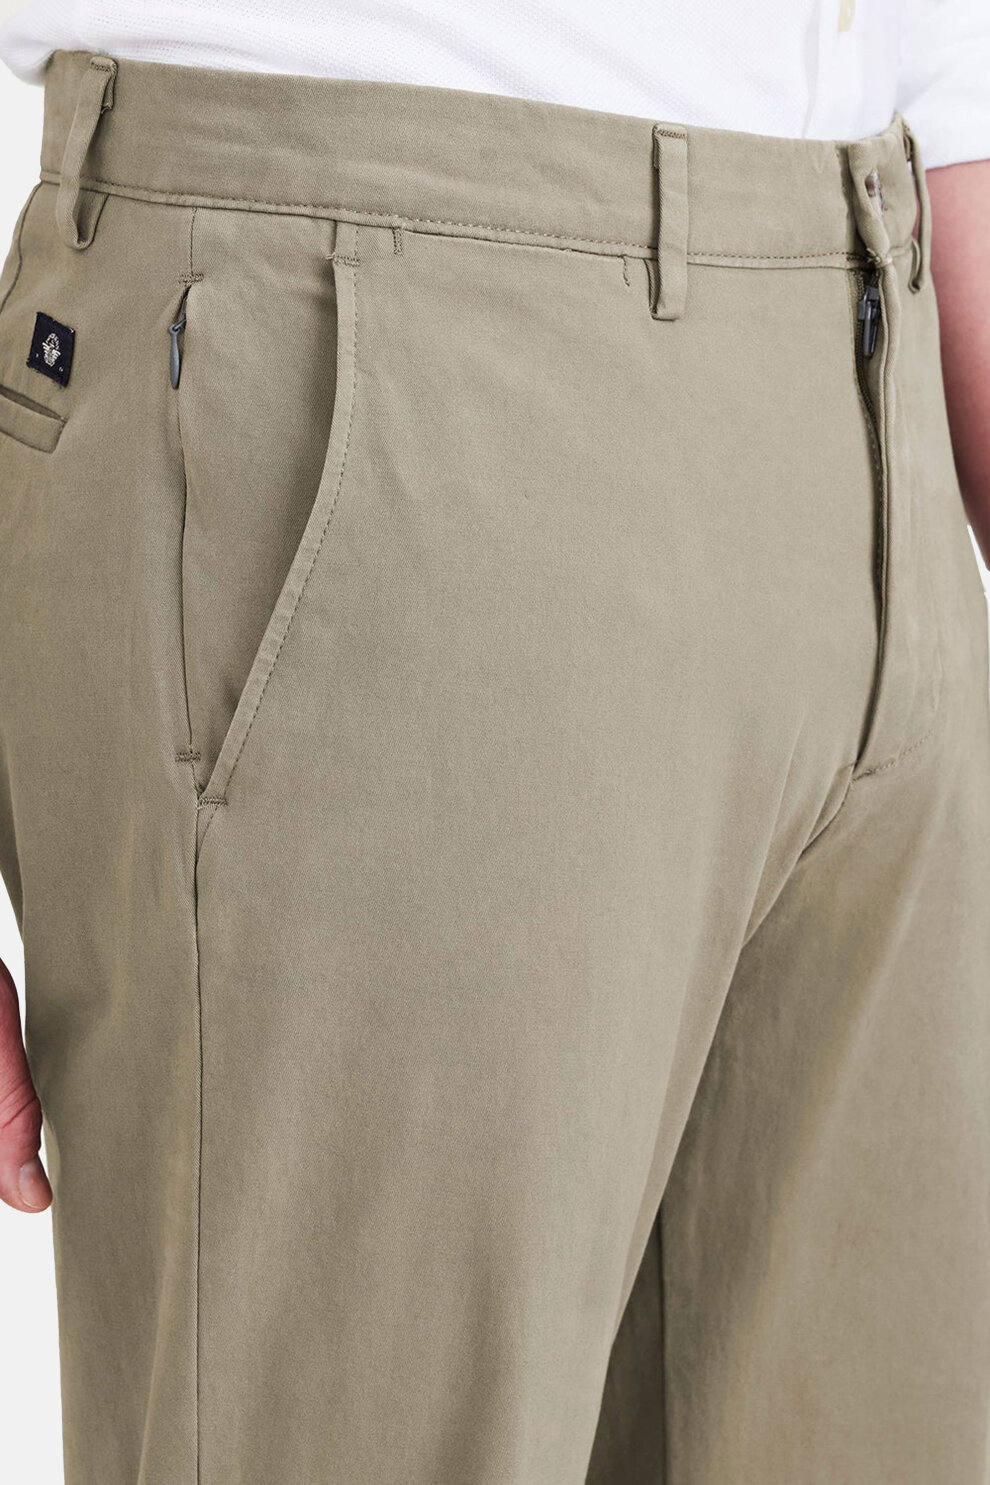 MUŠKARCI - Hlače - Dockers Chino hlače - Duge hlače - Zelena